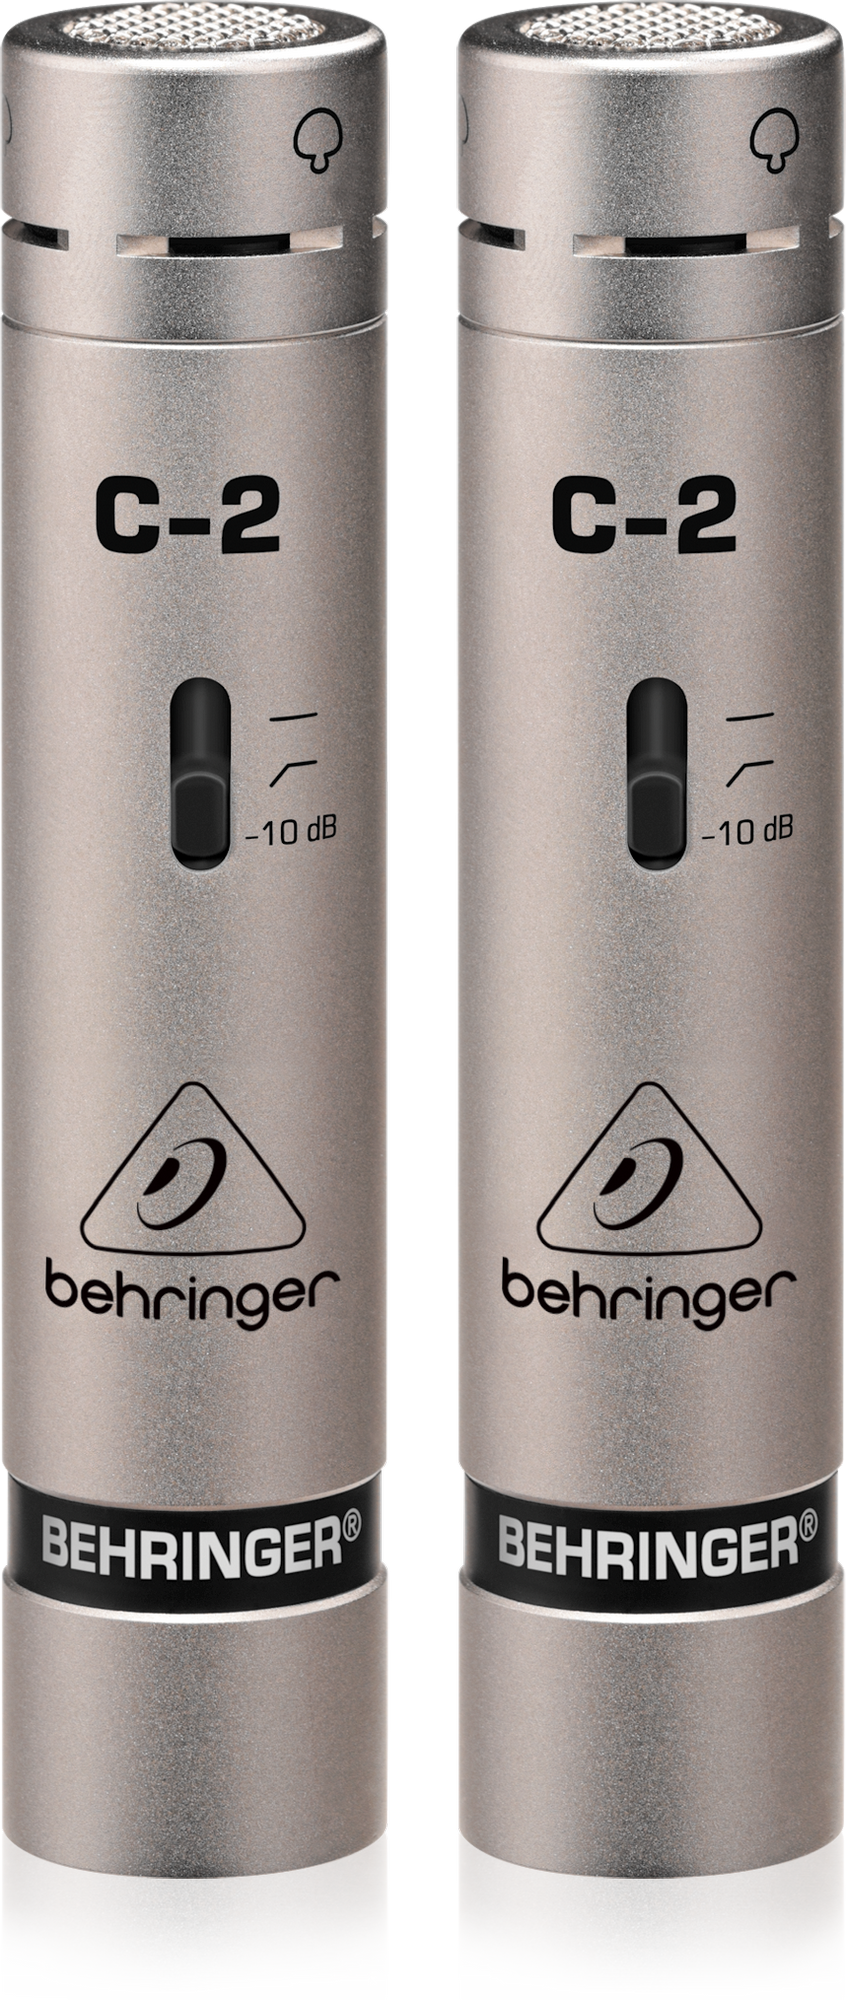 Behringer | Product | C-2